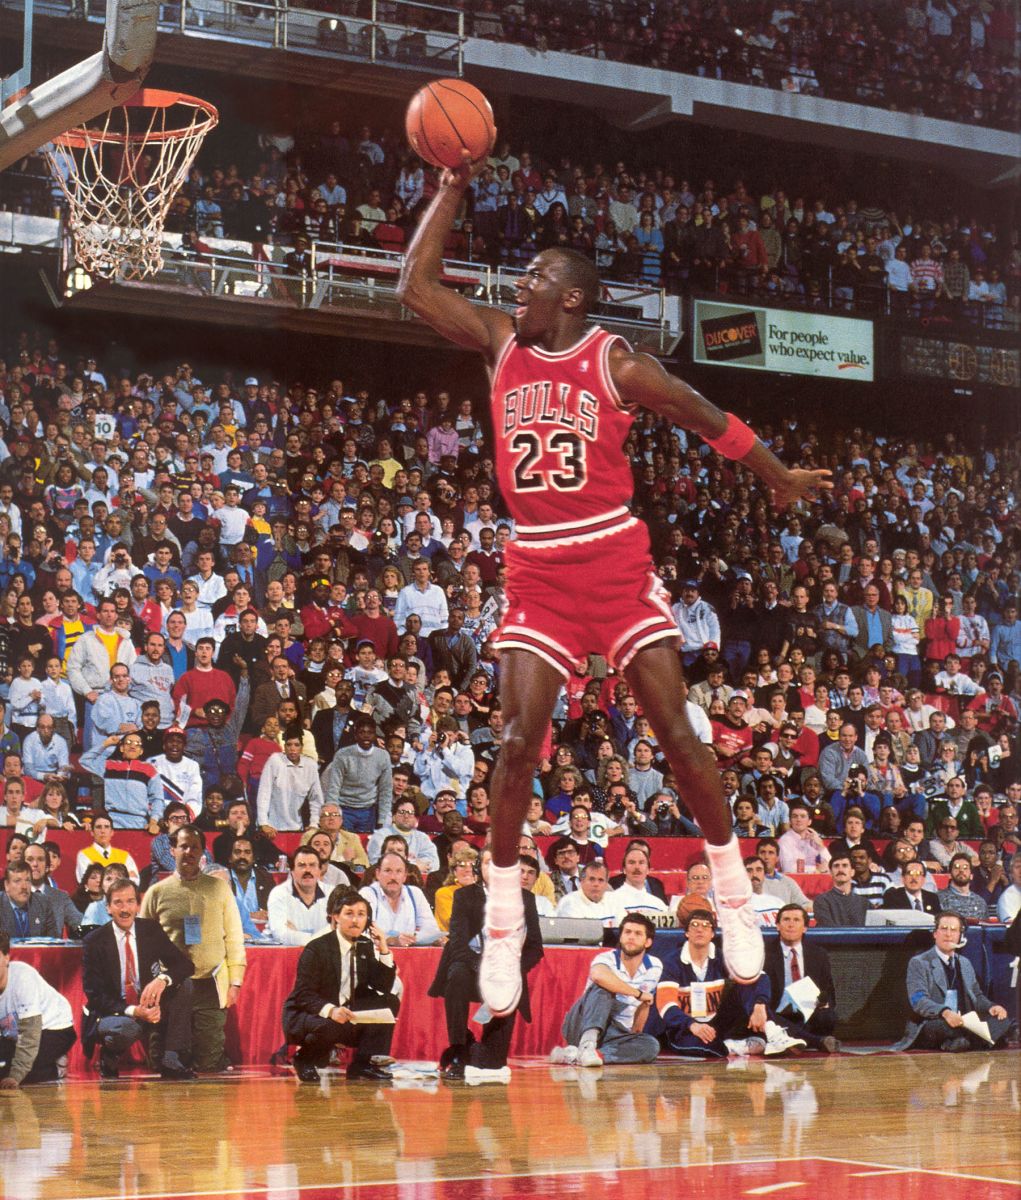 Michael Jordan wearing the "Cement" Air Jordan III